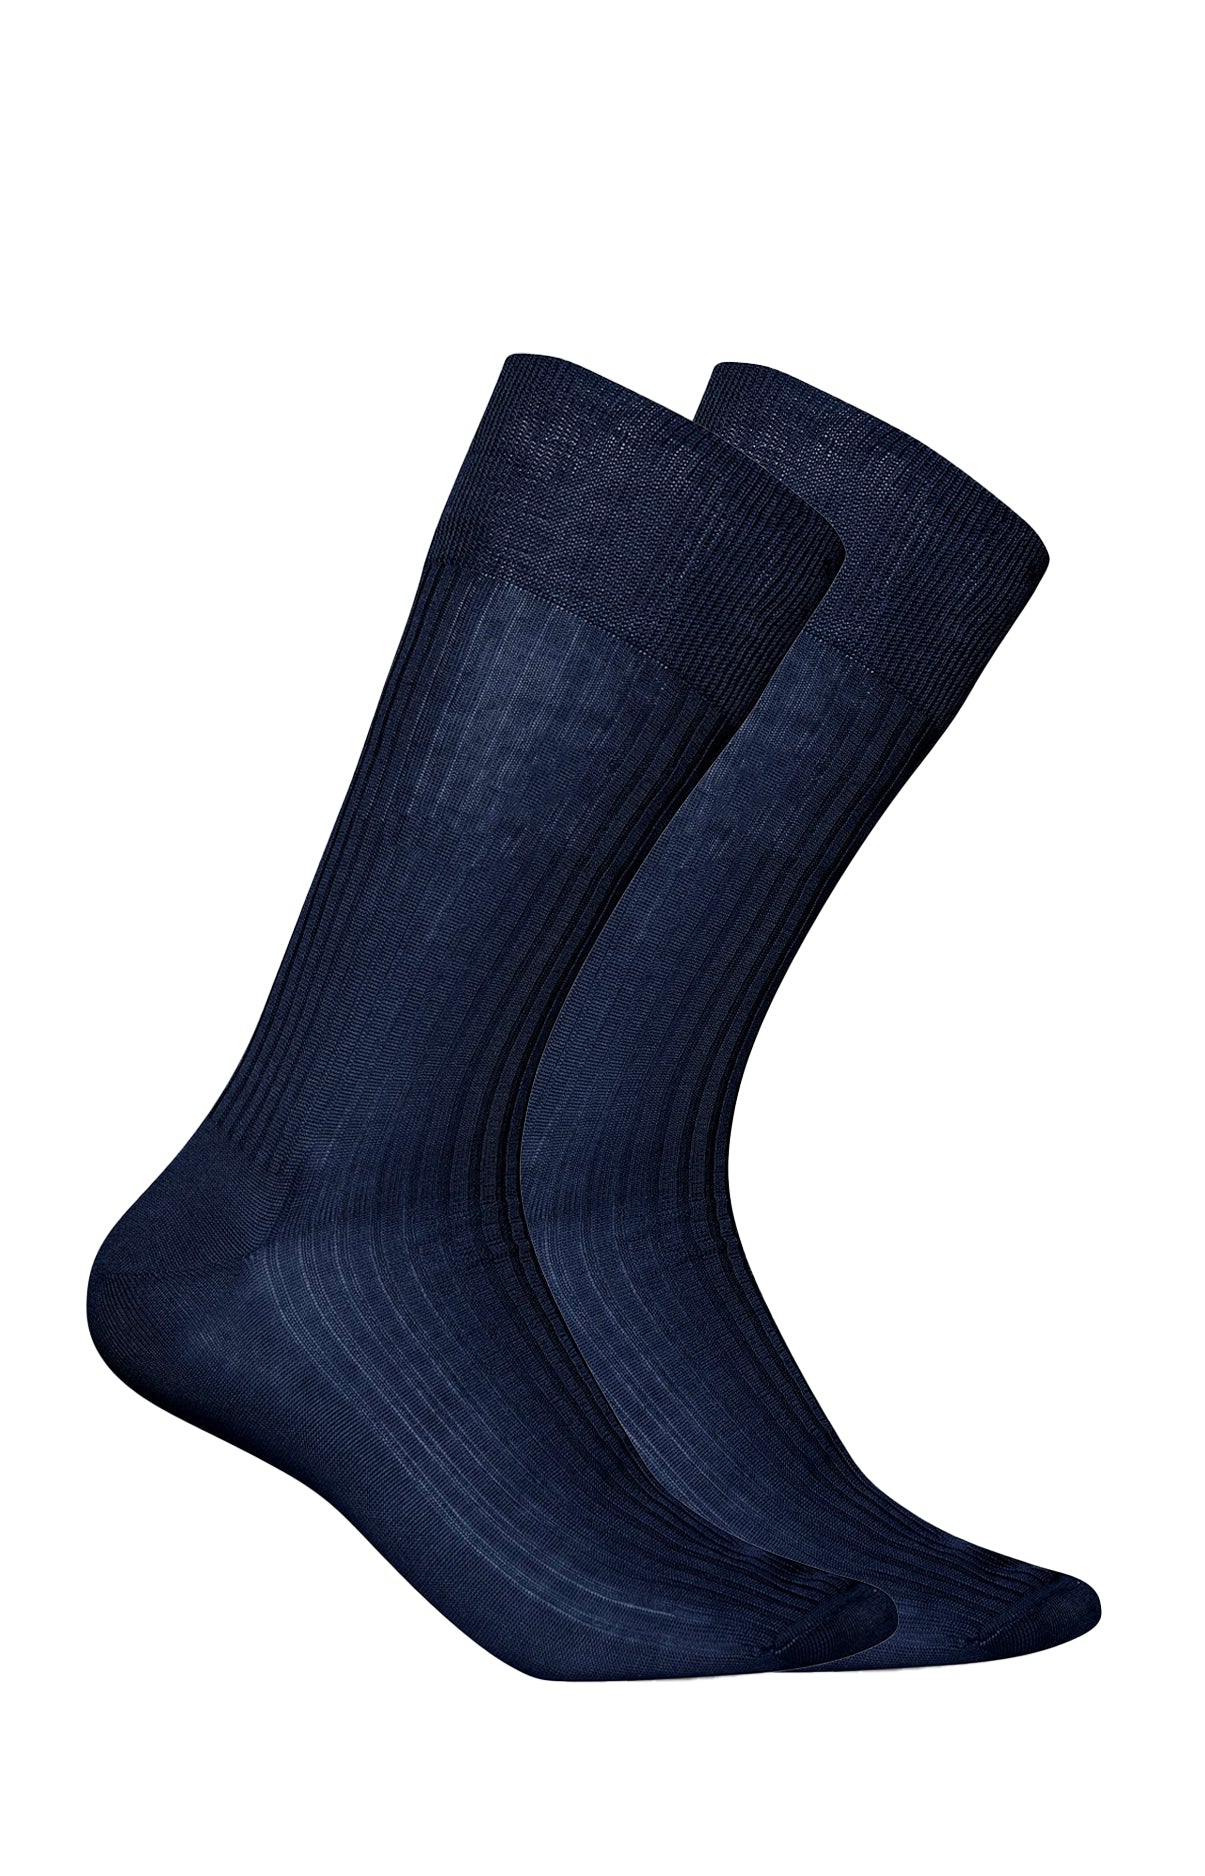 Pack of 2 socks - Scottish thread